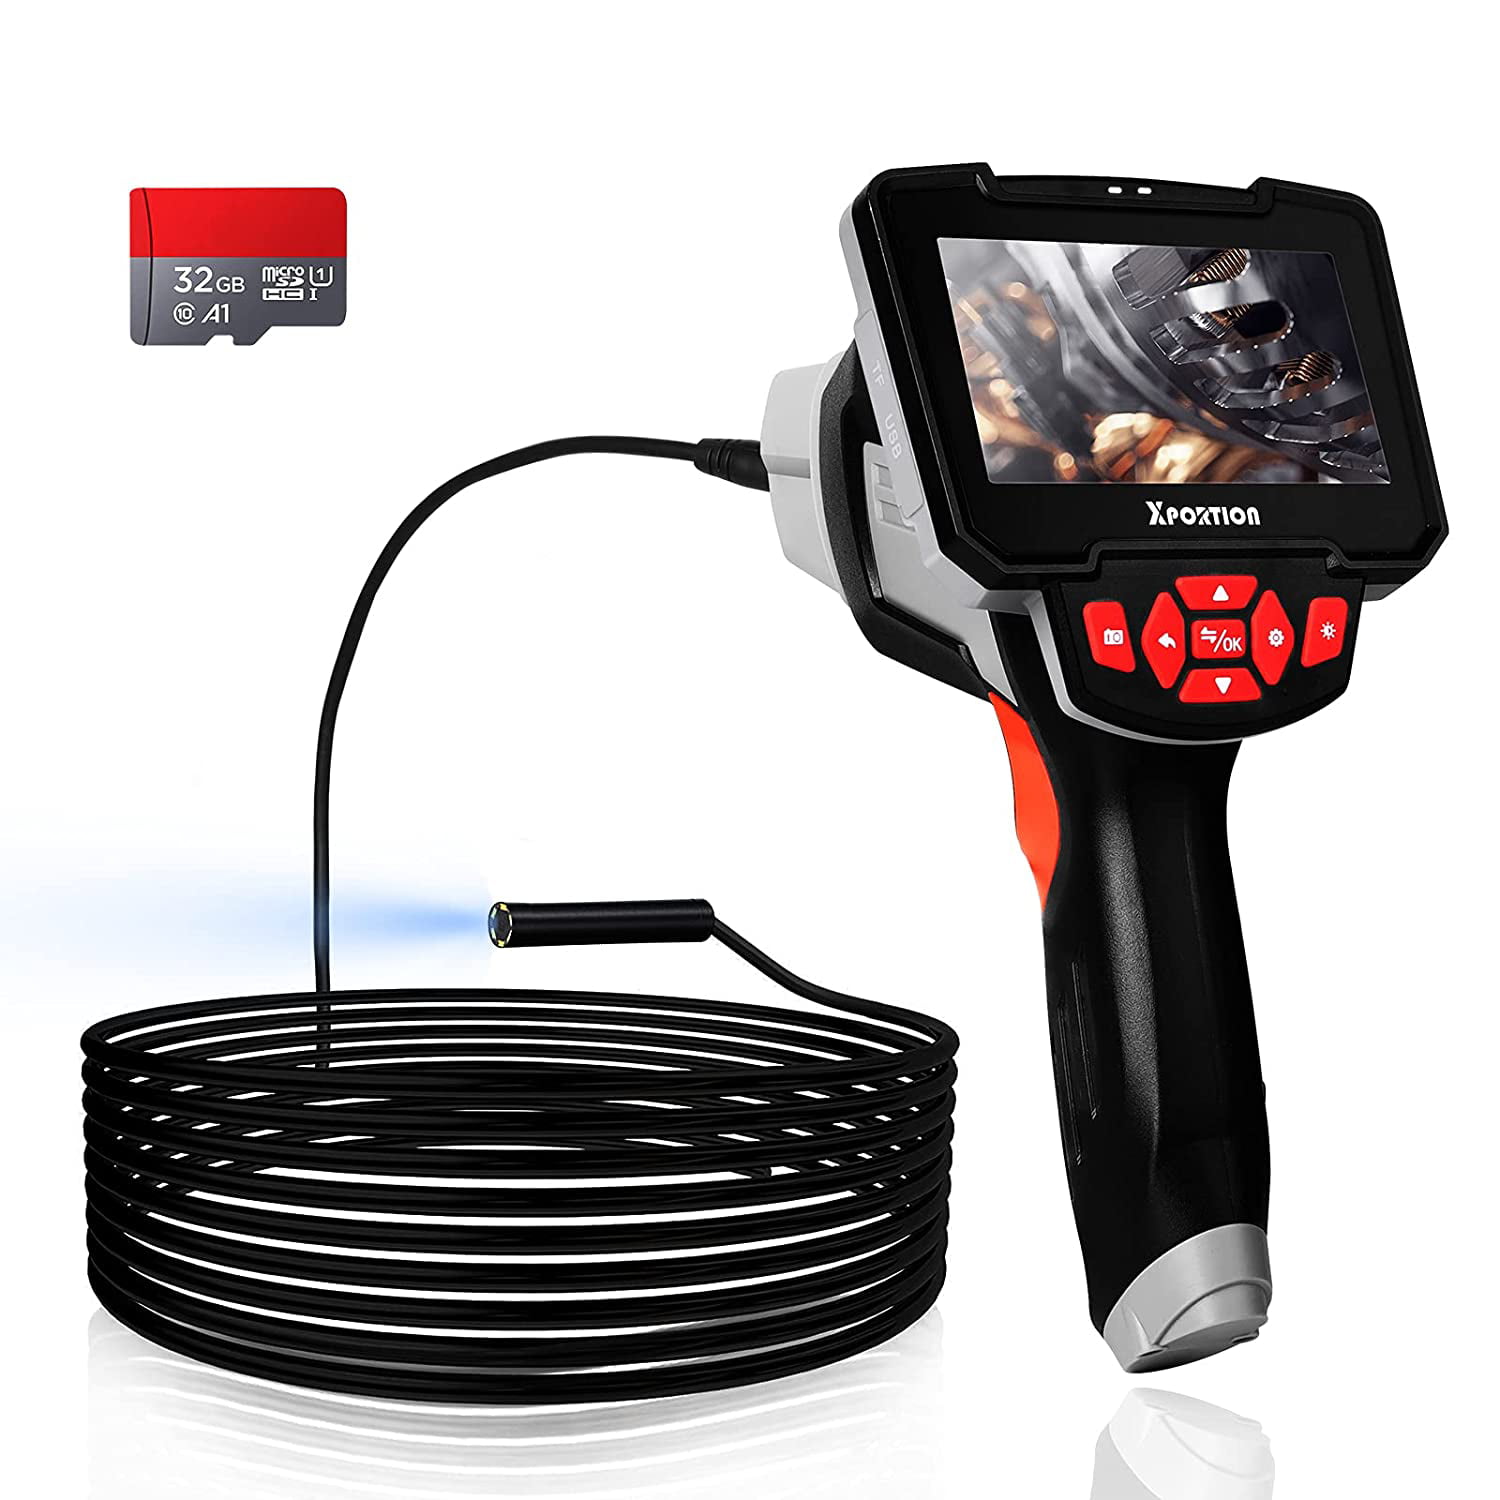 Precise Industrial Endoscope HD Camera 1080P 2.4" Screen Borescope Inspection 